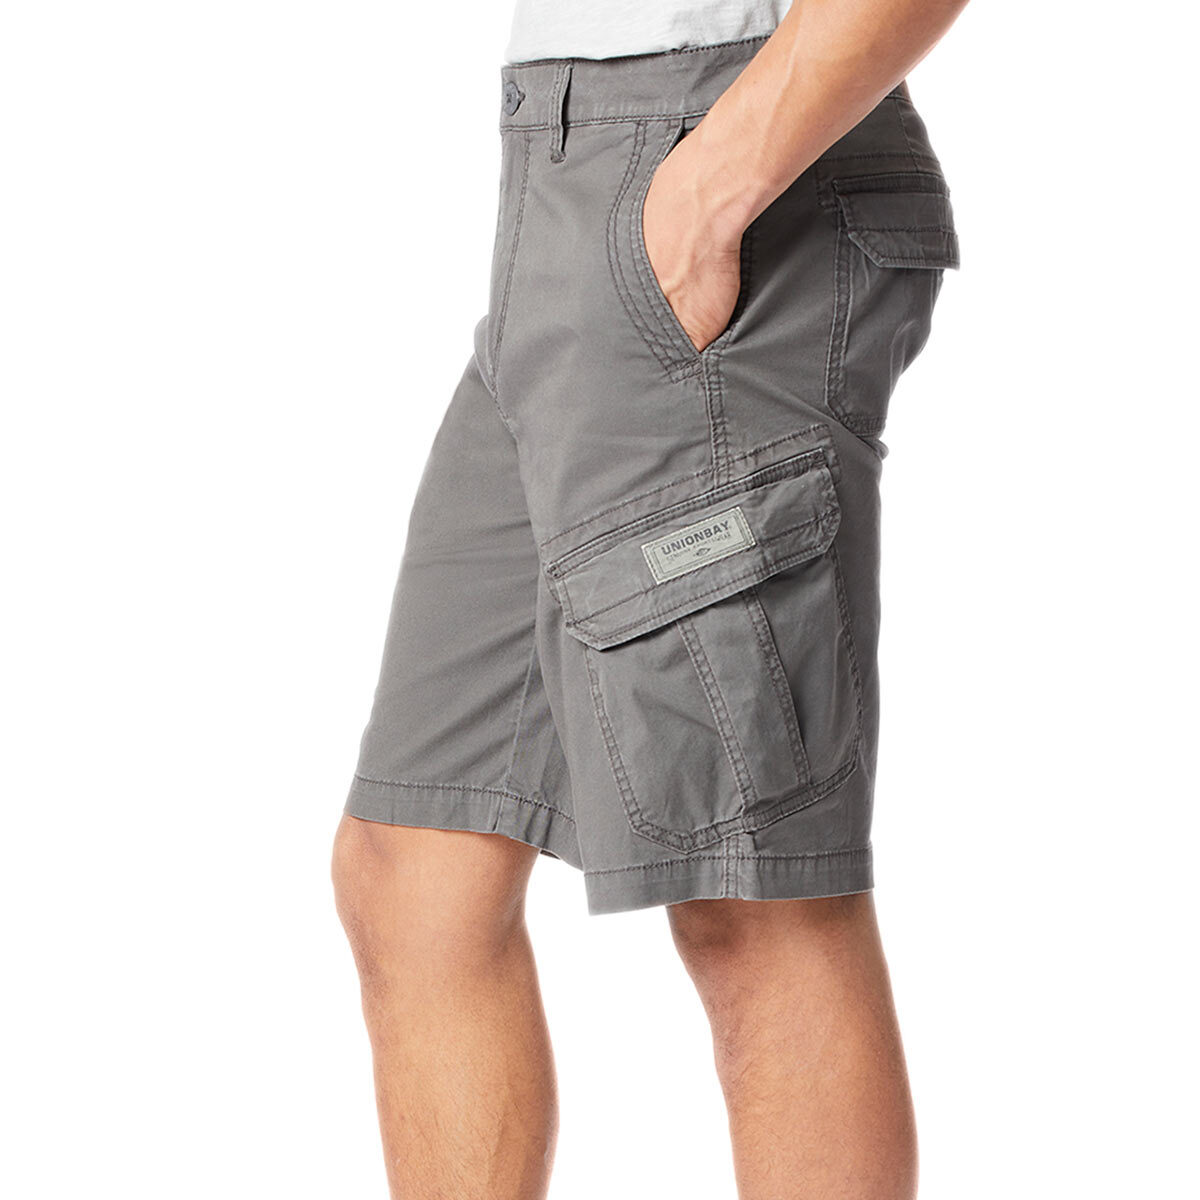 Union Bay Dexter Cargo Men's Shorts in Grey